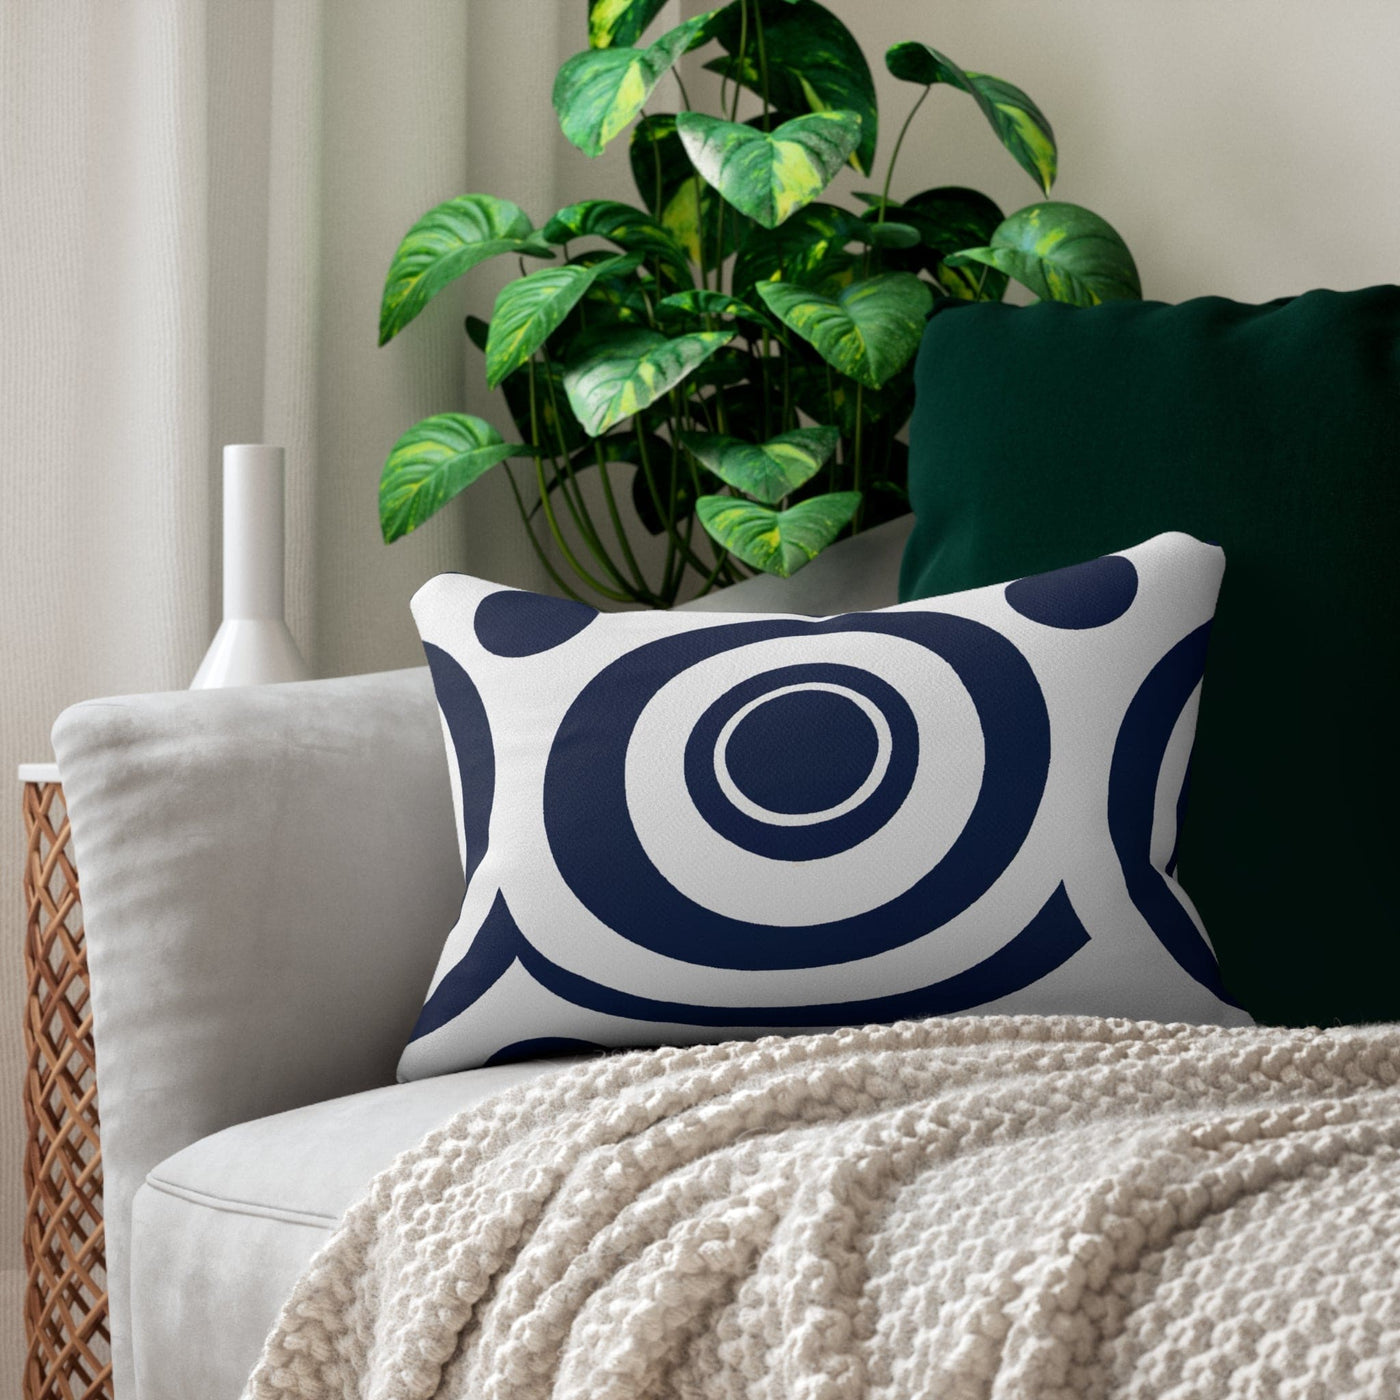 Lumbar Pillow Navy Blue And White Circular Pattern - Home Decor